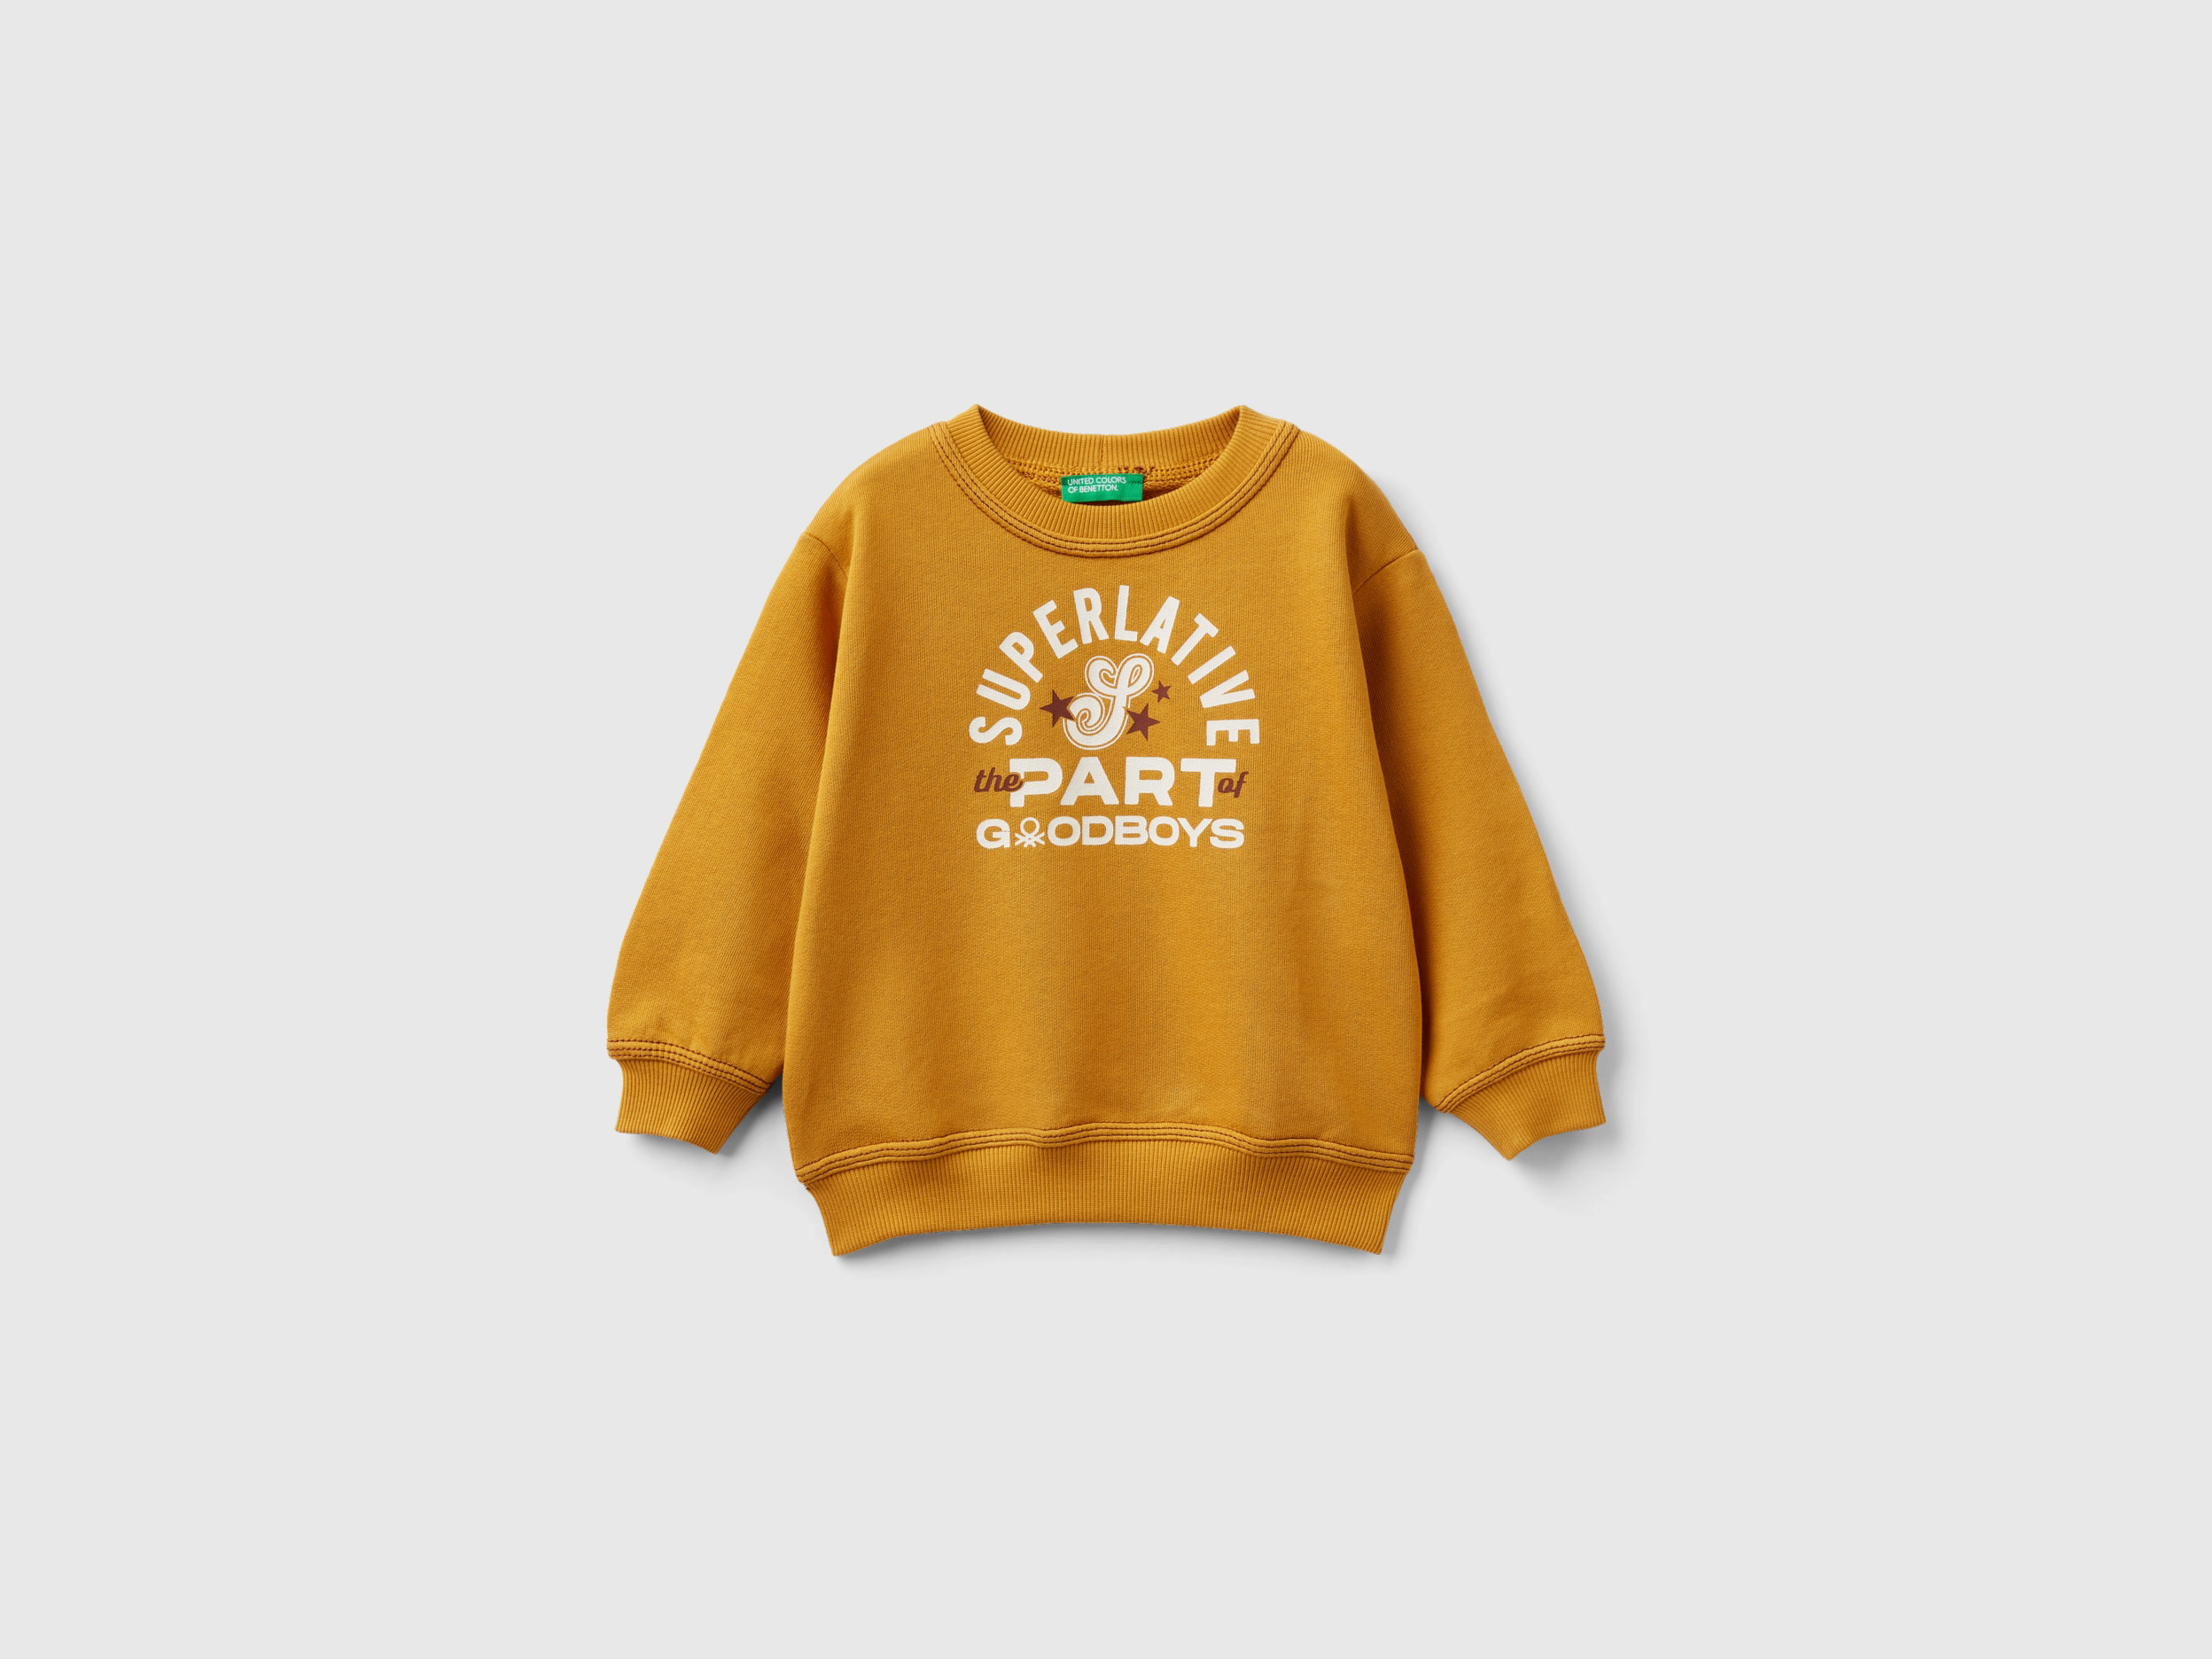 Benetton, Pullover Sweatshirt With Print, size 3-4, Mustard, Kids